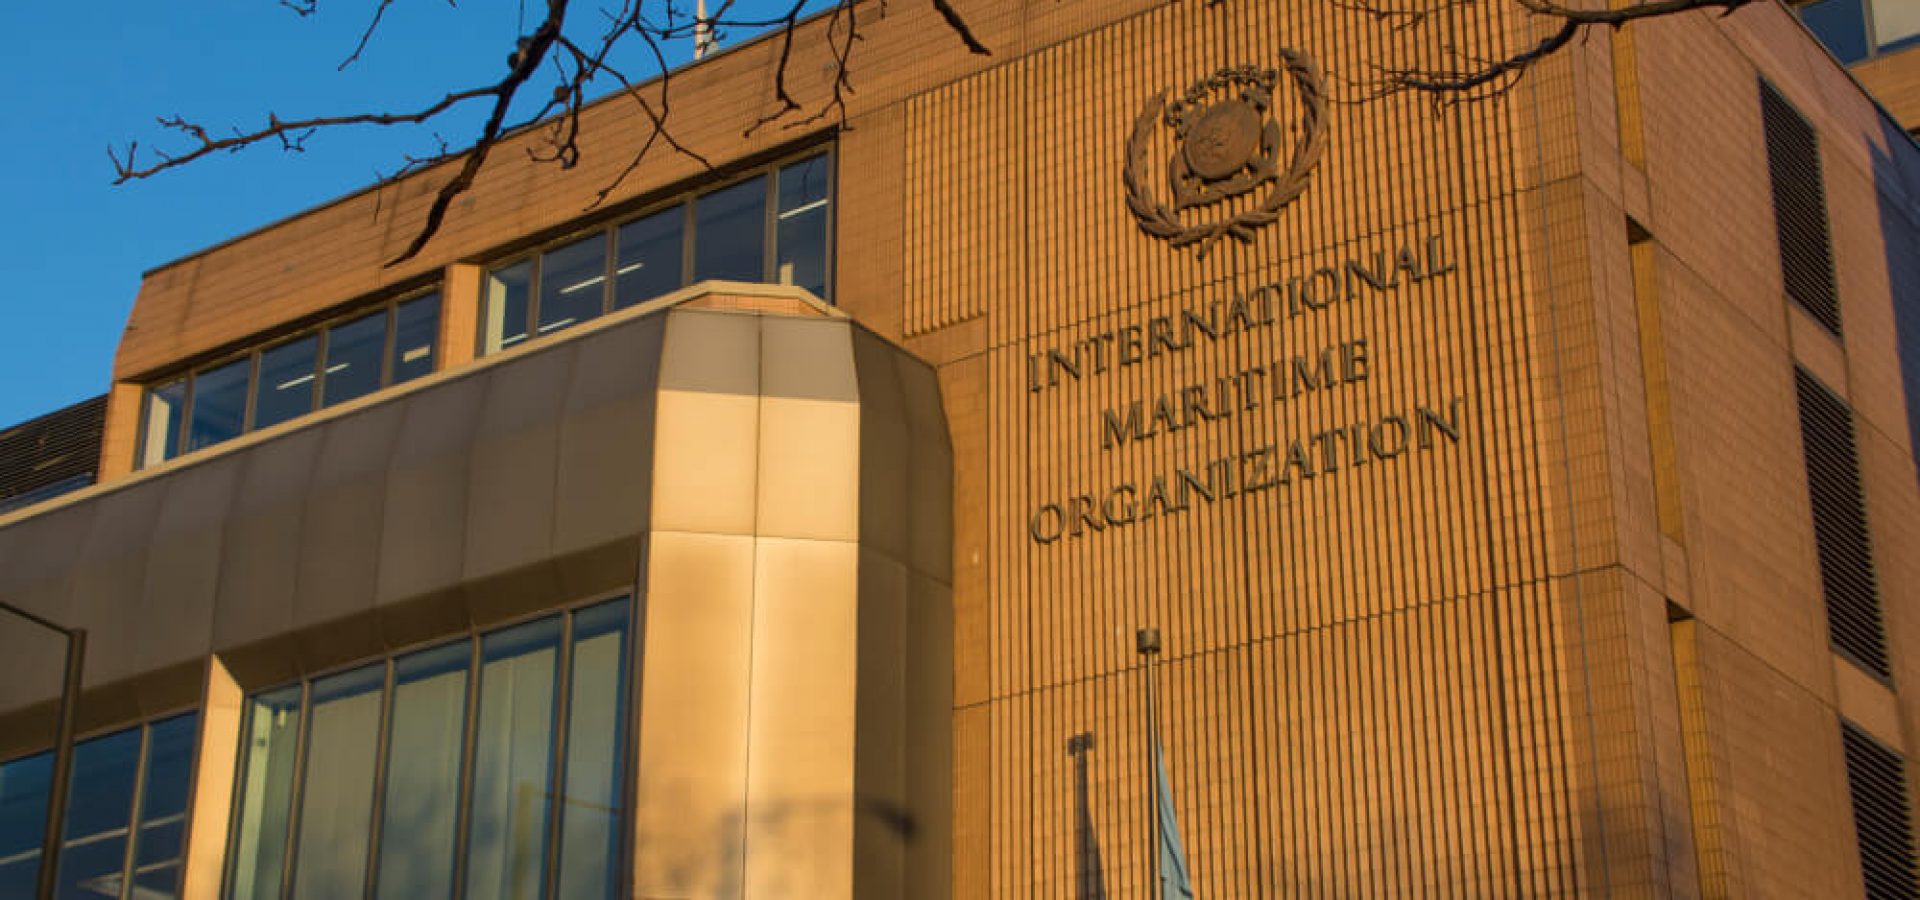 International Maritime Organization: International Maritime Organization exterior